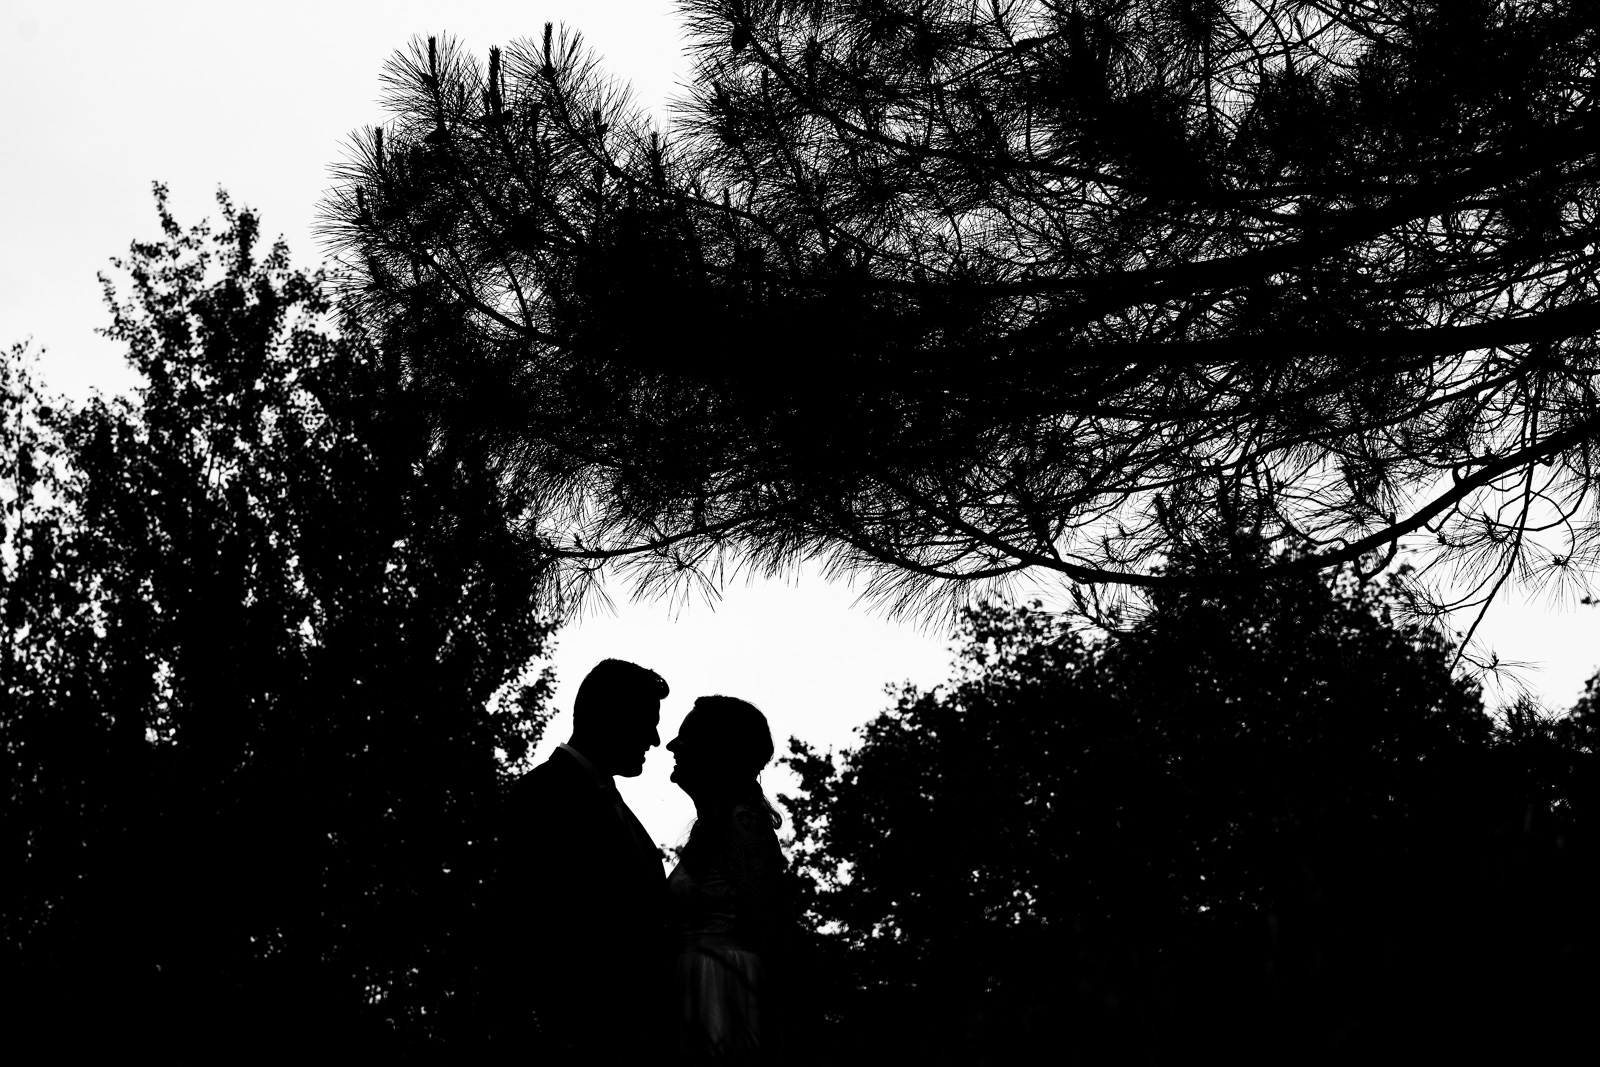 Trouwfotograaf Den Haag silhouette bruidspaar